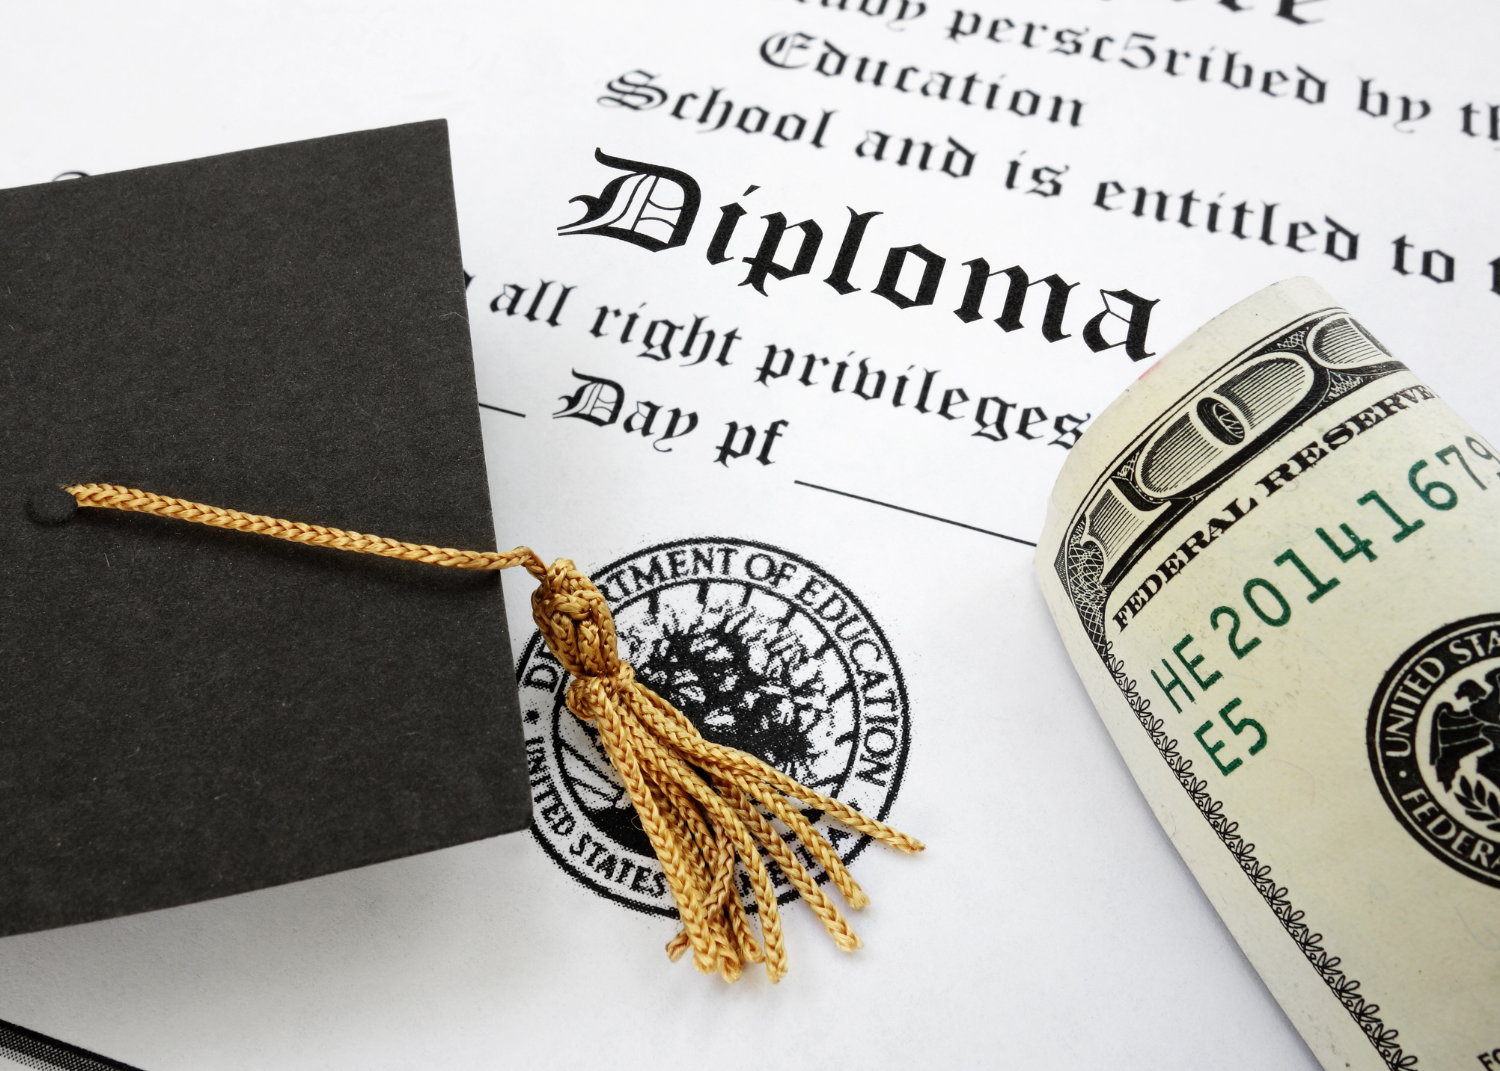 graduation cap next to money and a diploma